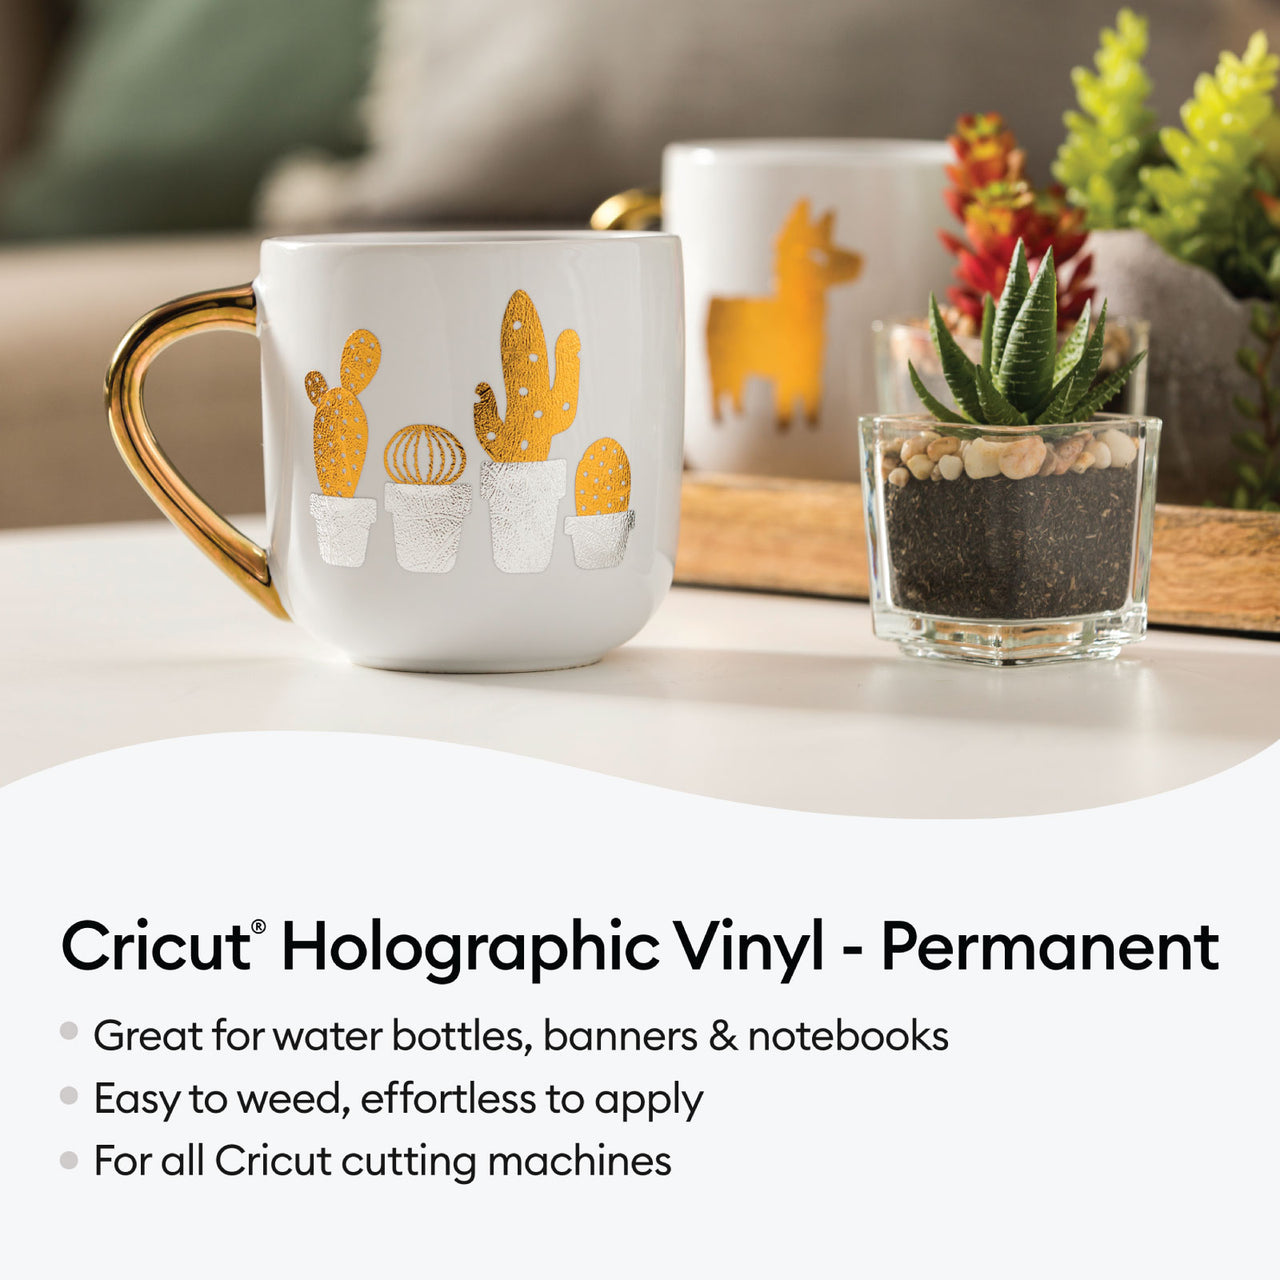 Cricut Holographic Vinyl, Pink Sampler - Permanent 6 ct